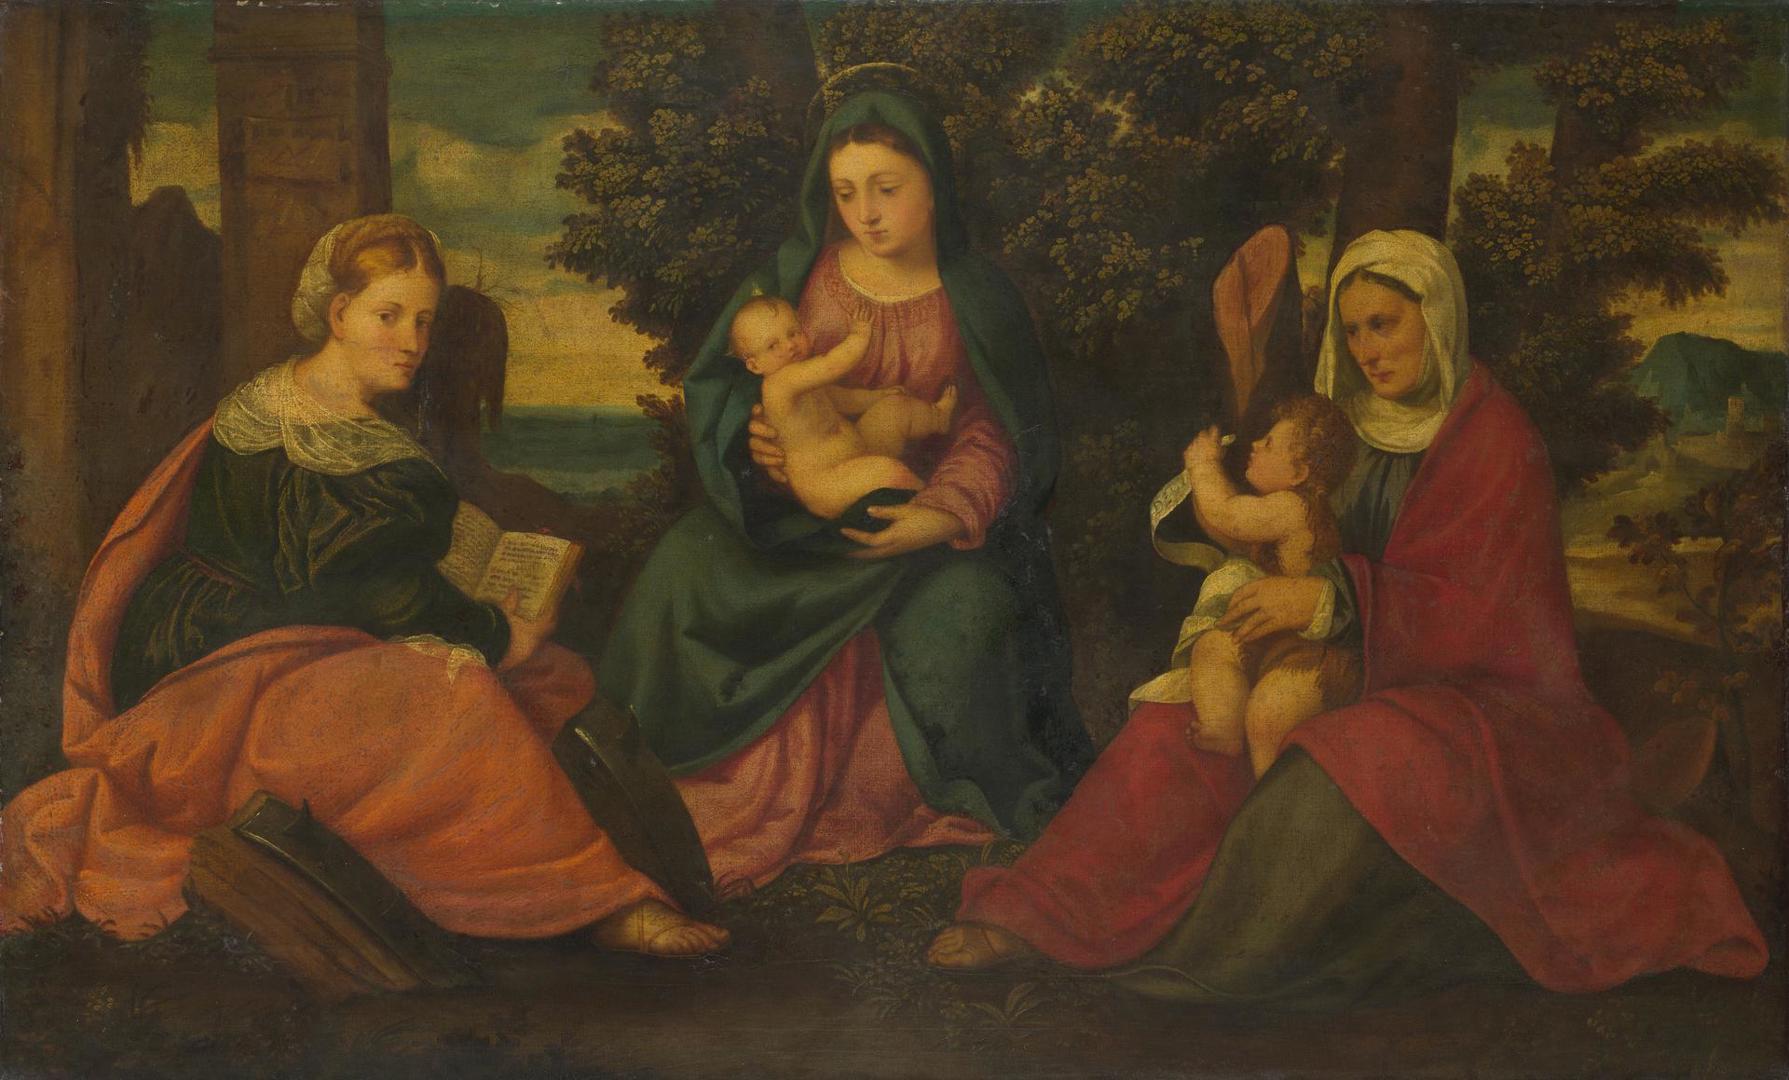 The Madonna and Child with Saints by Style of Bonifazio di Pitati